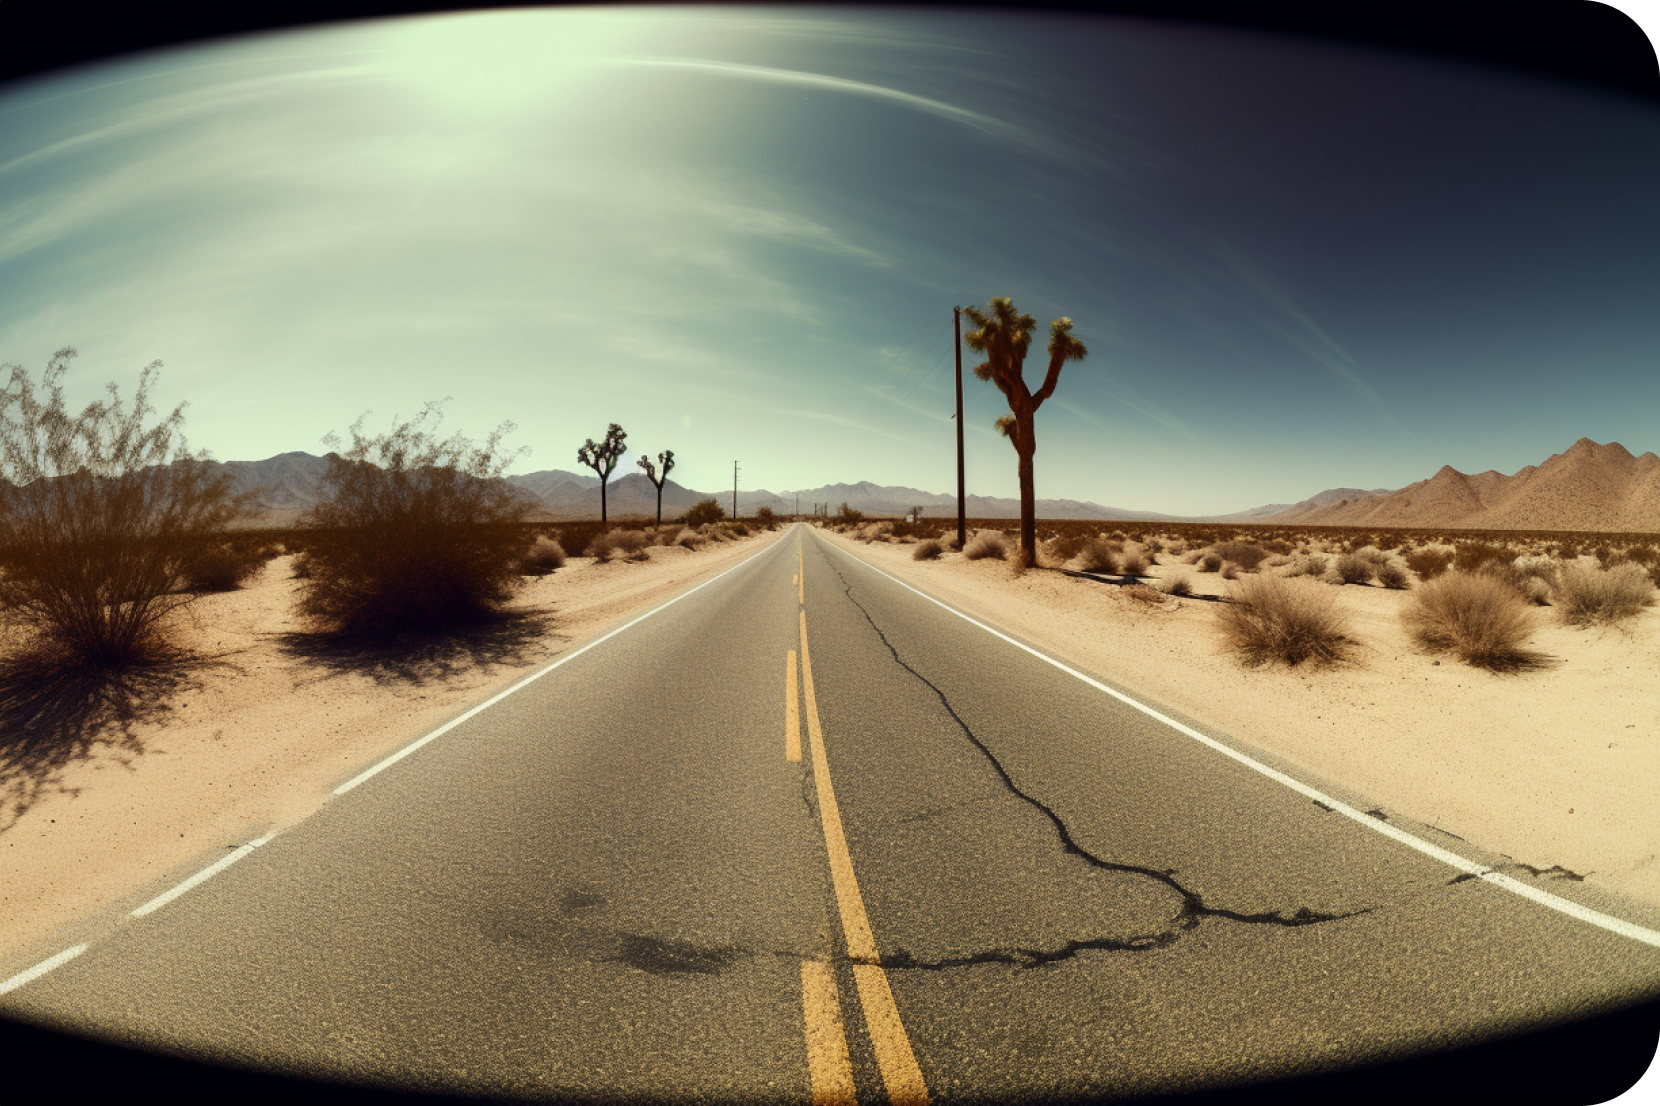 fish lens view of desert highway